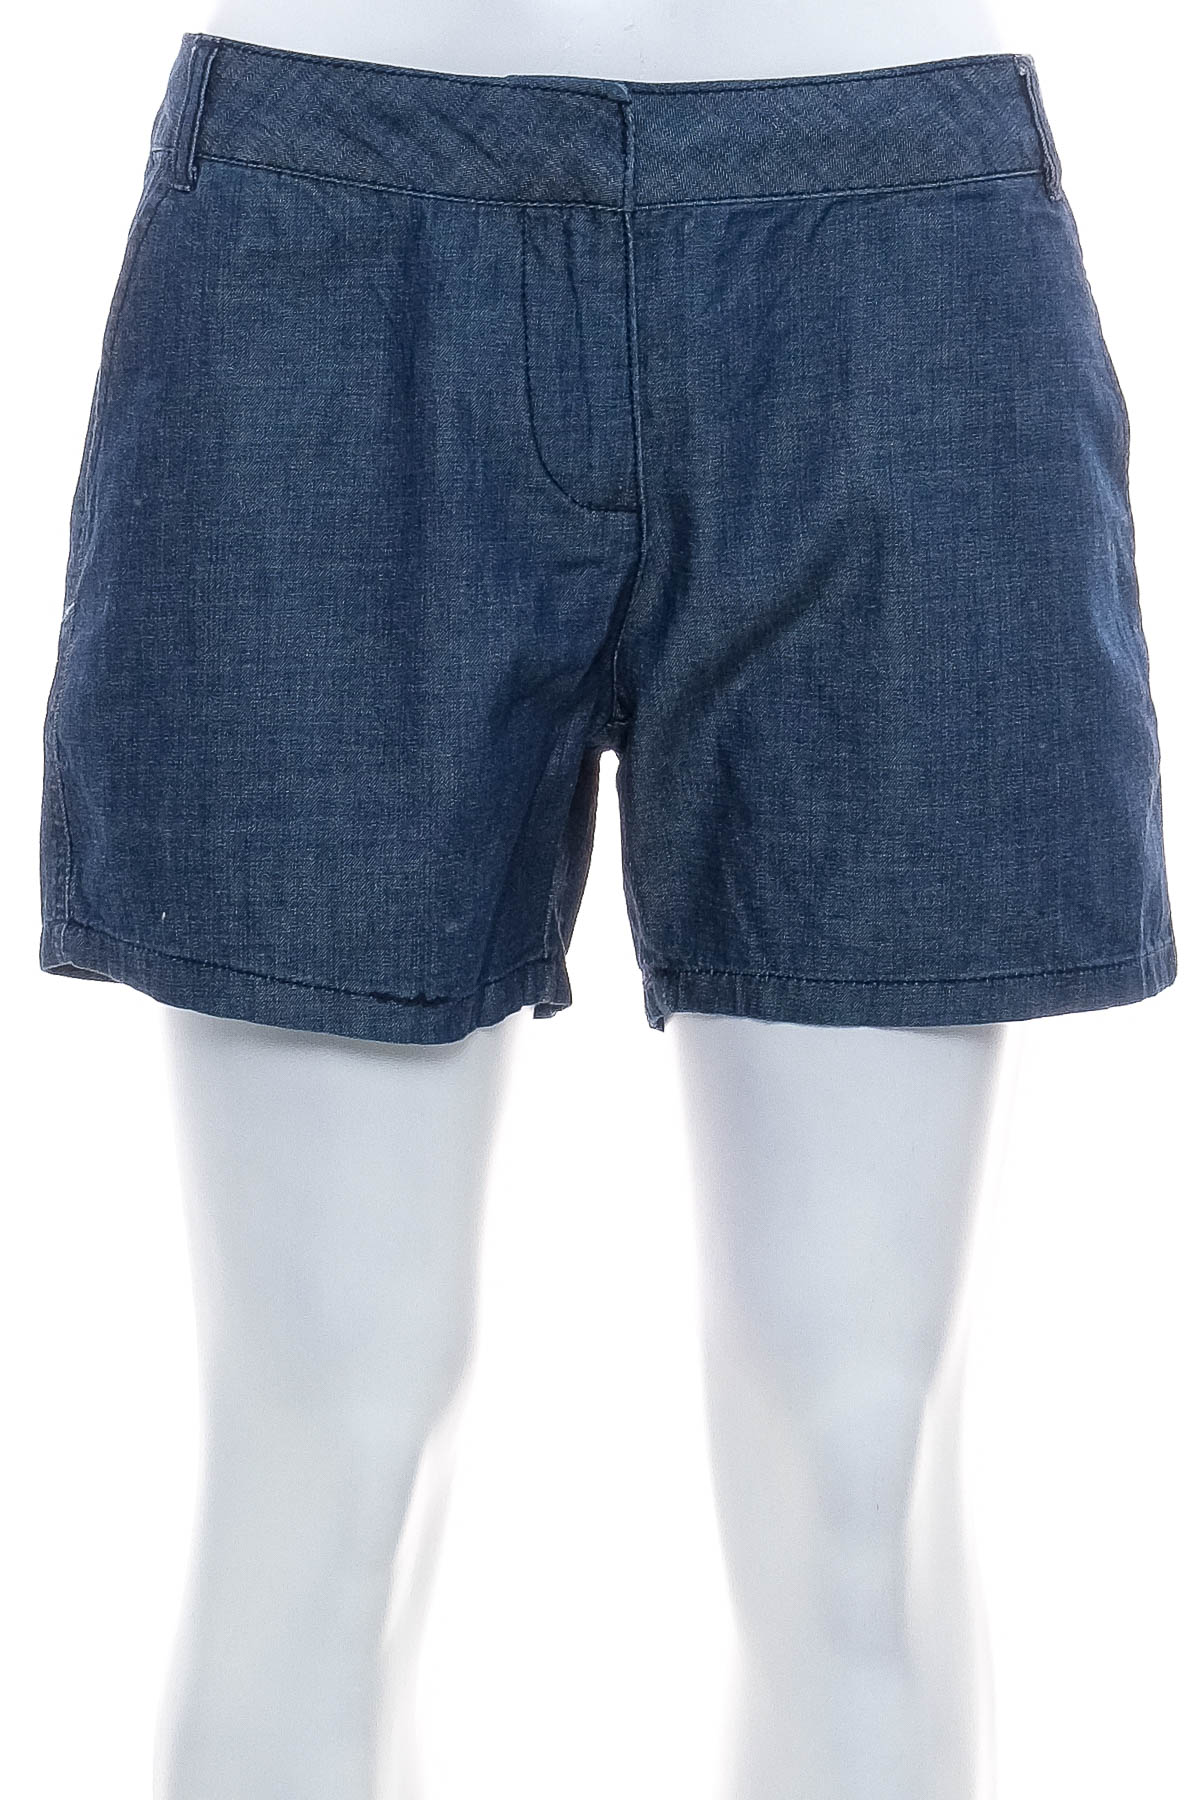 Female shorts - Joules - 0